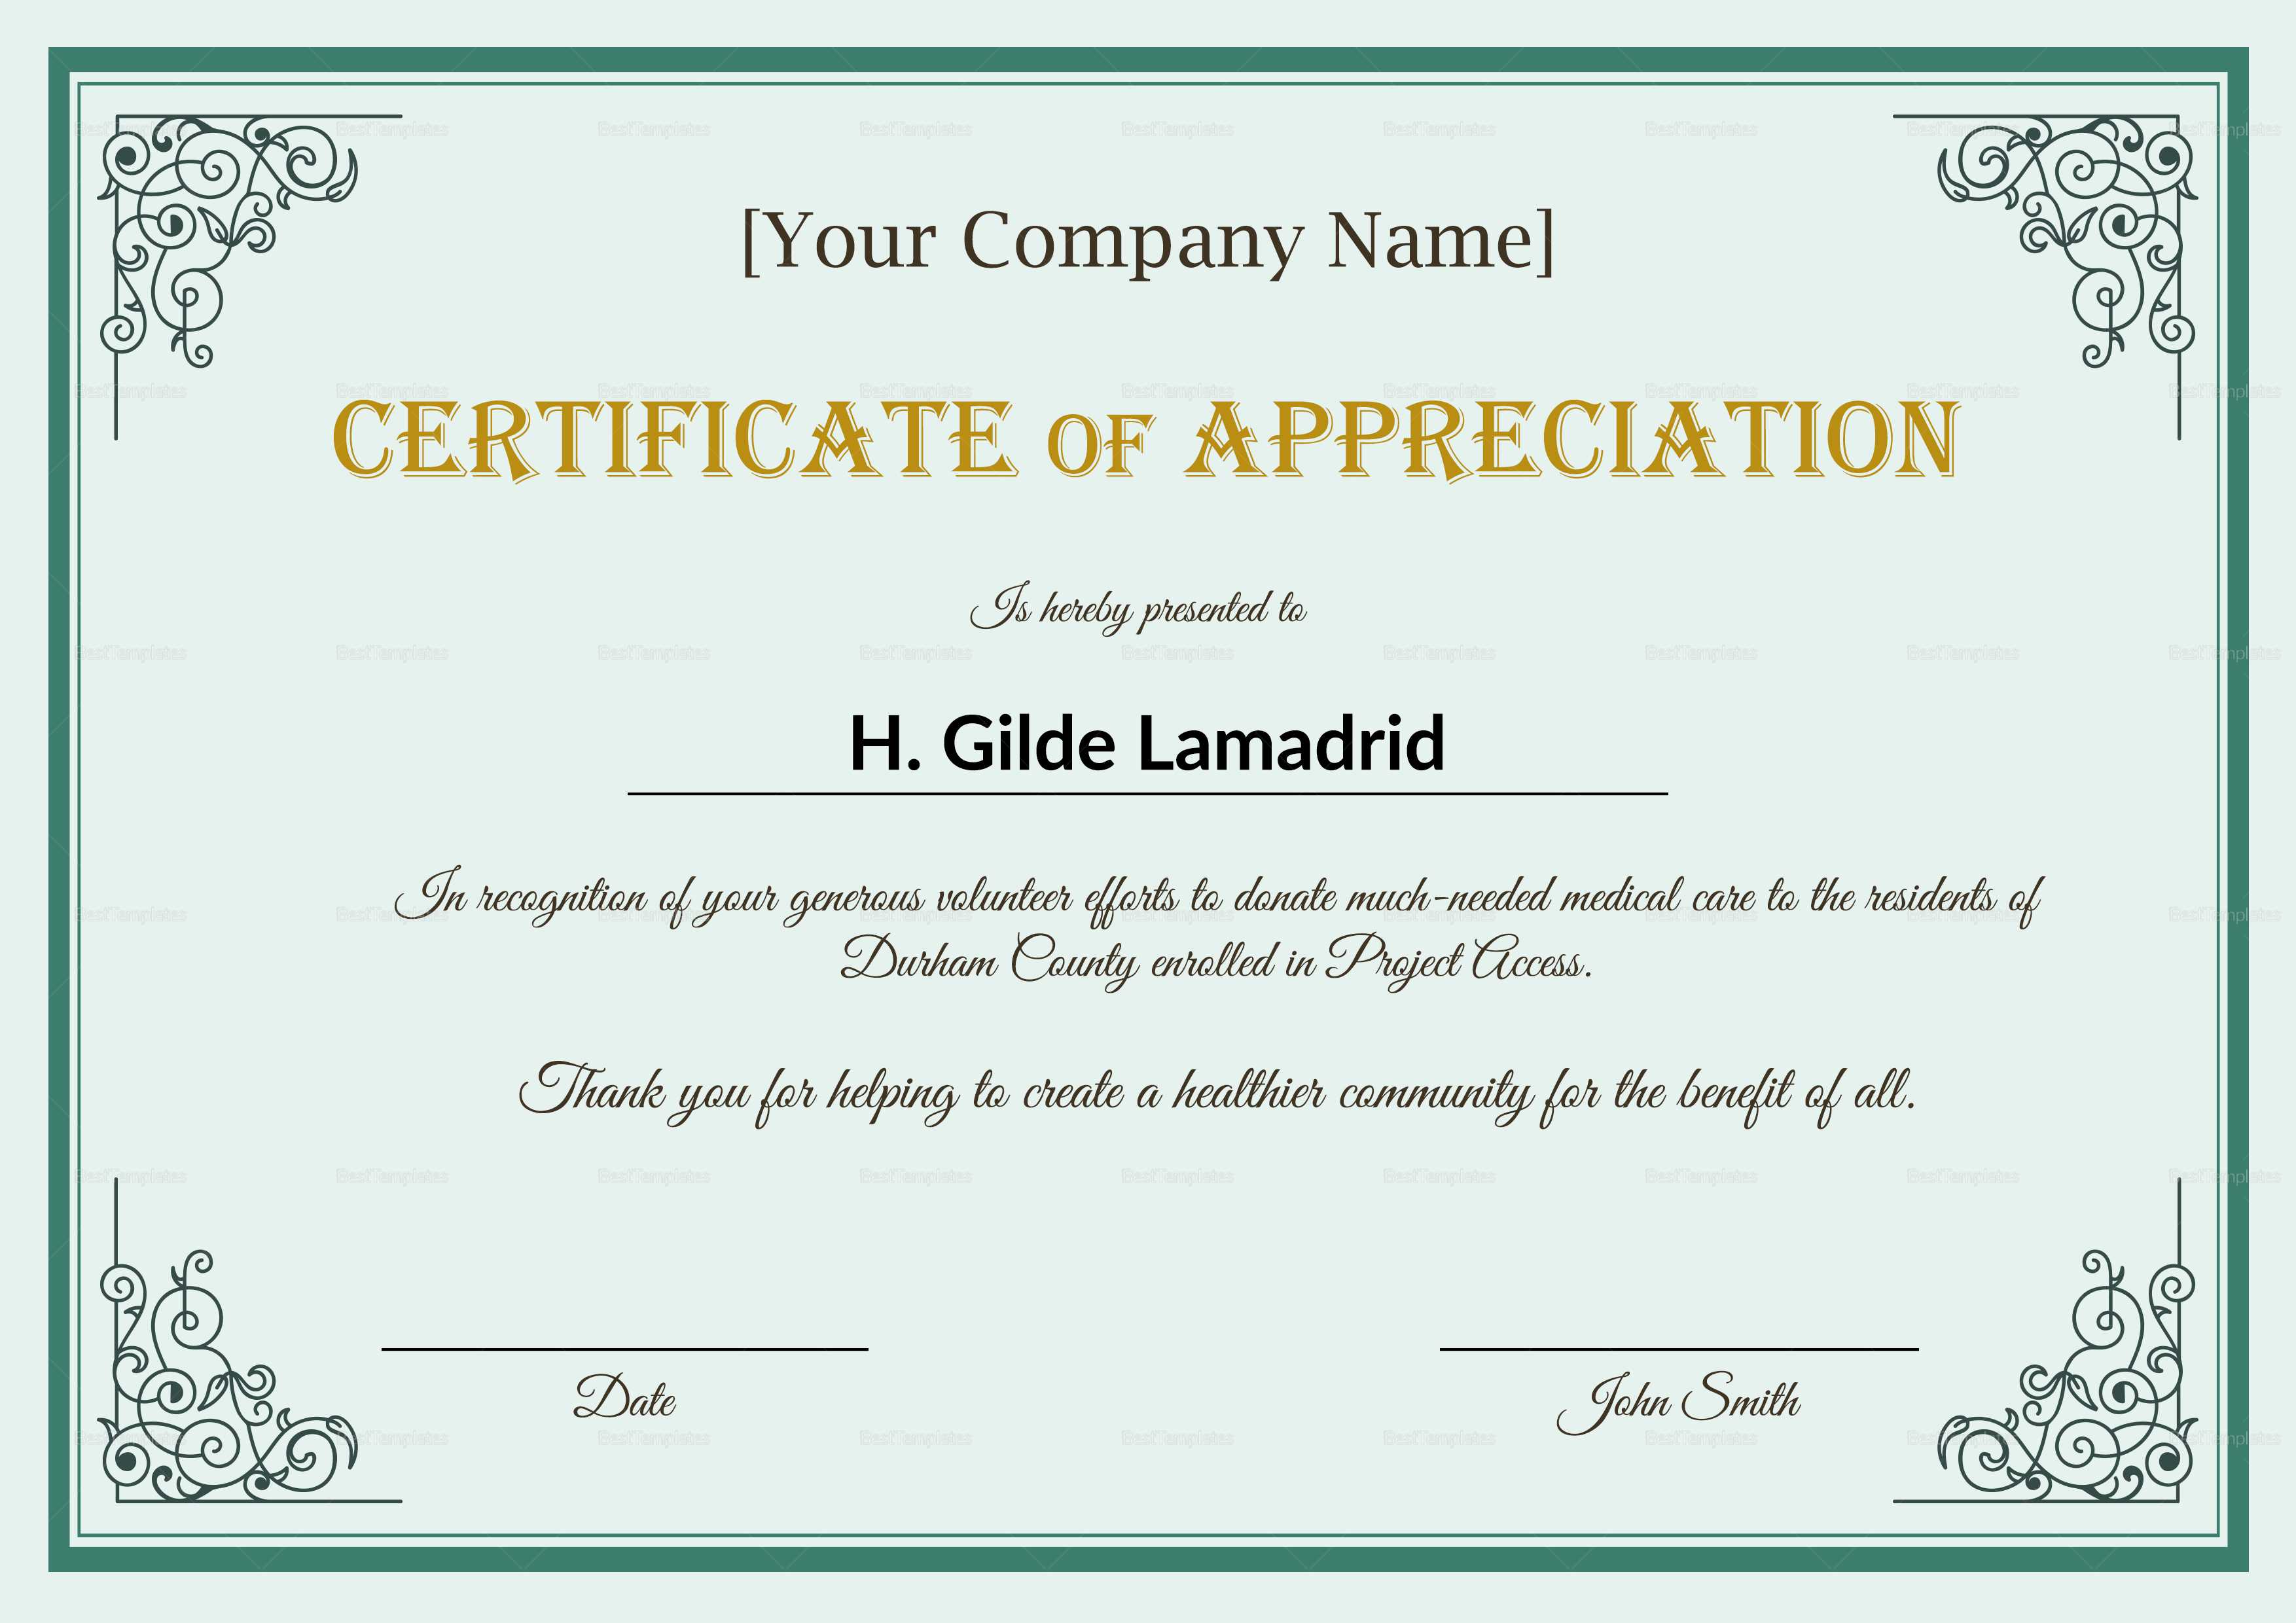 Company Employee Appreciation Certificate Template With In Appreciation Certificate Templates